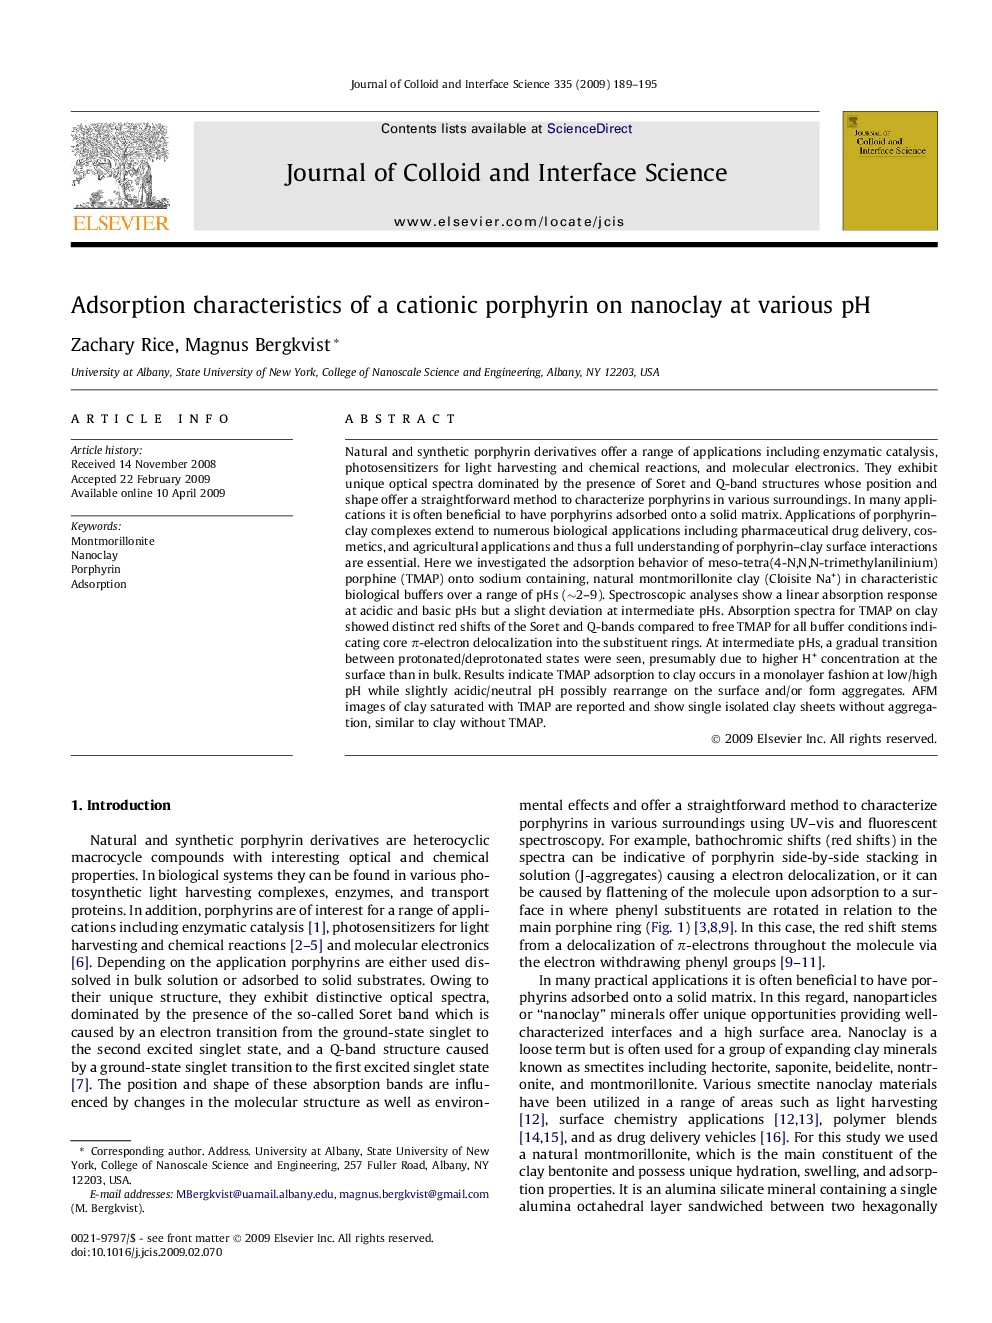 Adsorption characteristics of a cationic porphyrin on nanoclay at various pH